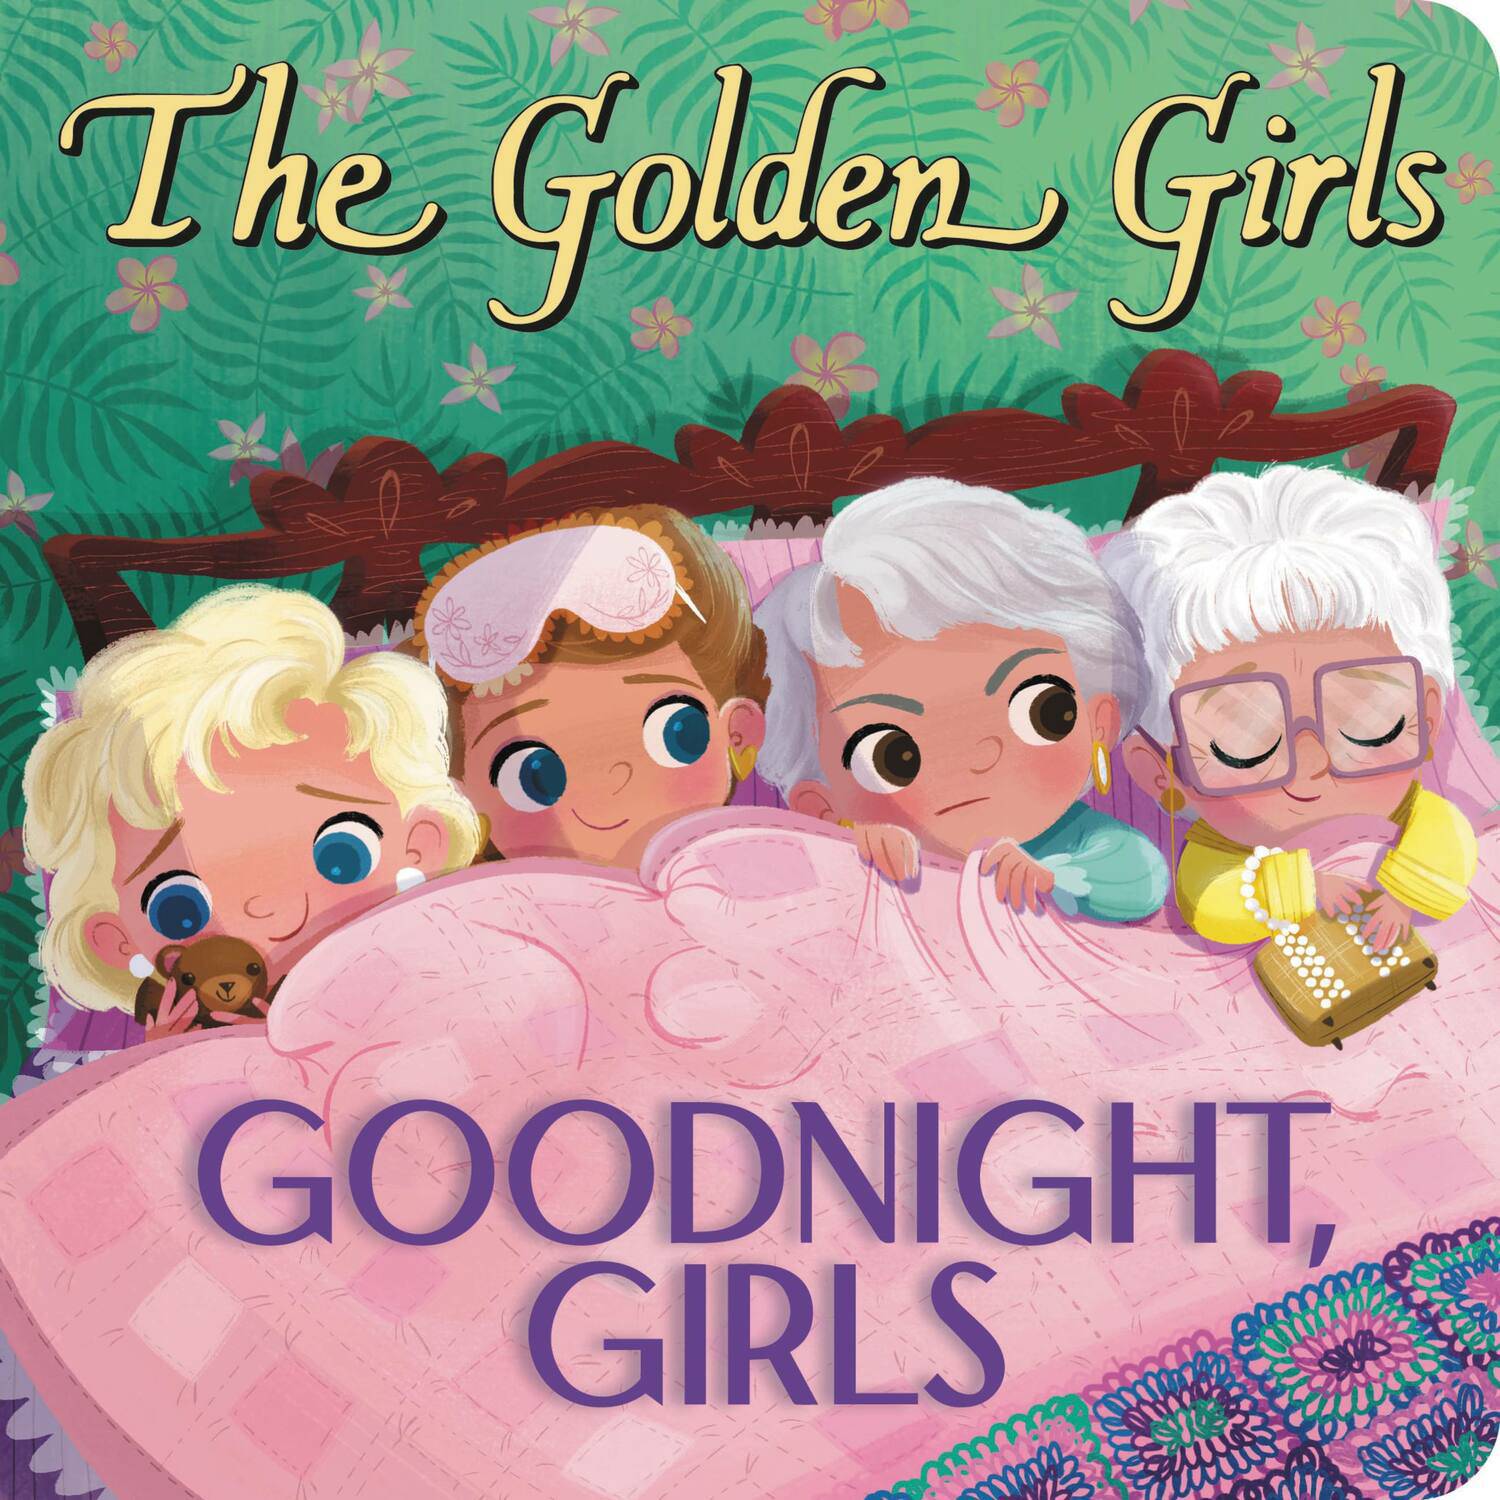 The Golden Girls - A Child's Delight